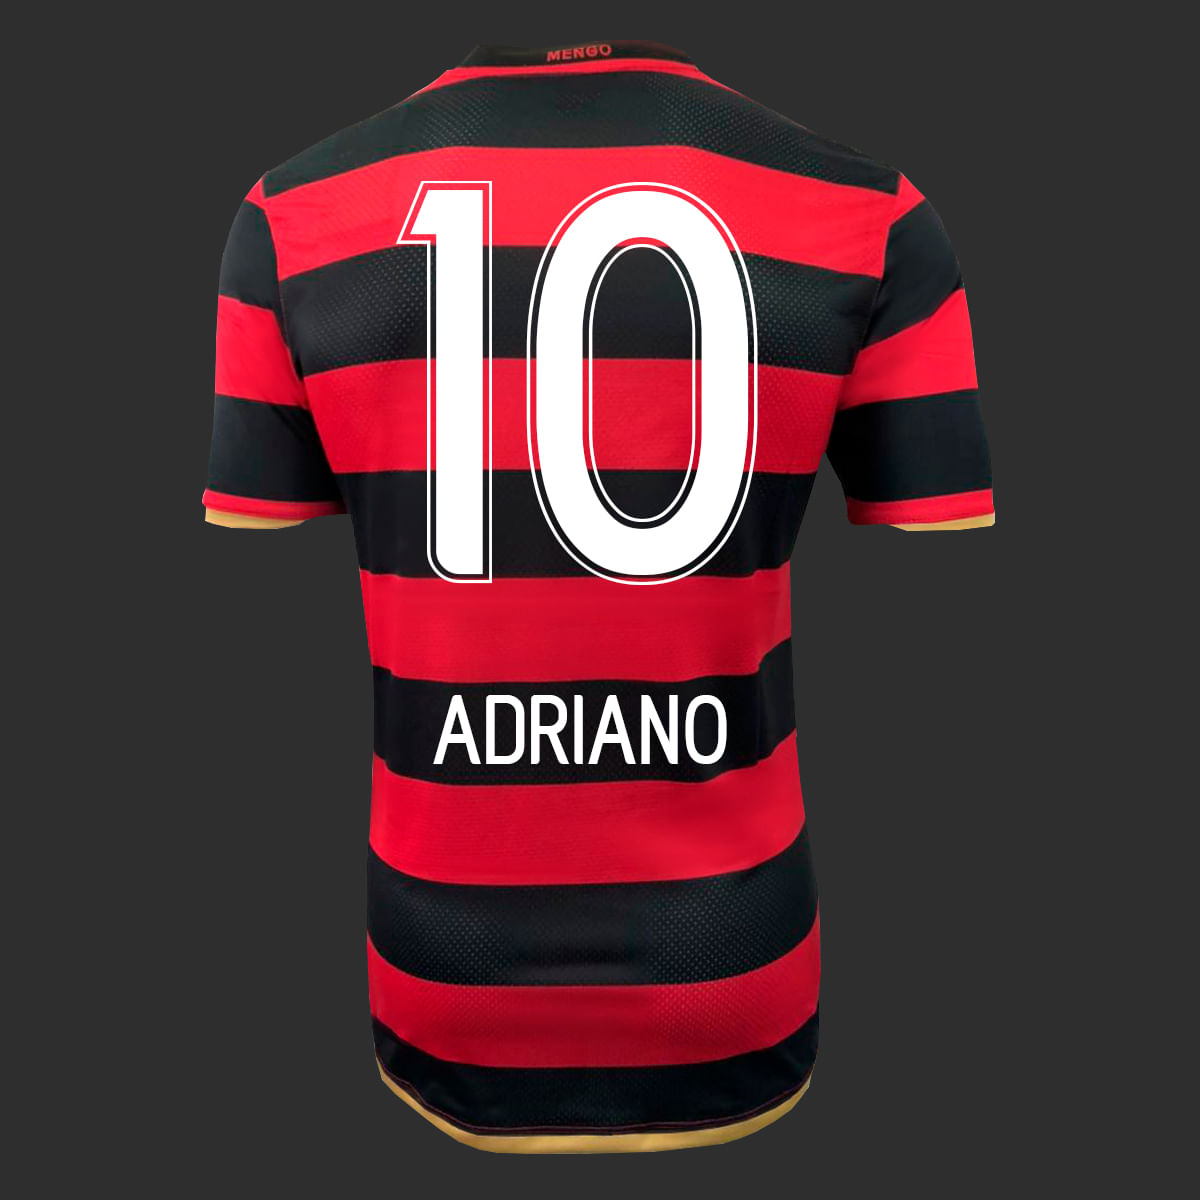 Vandalize Pure amplification NOVA RL ♛ - Camisa Nike Flamengo 2008/2009 Retrô - Adriano 10 - novarl